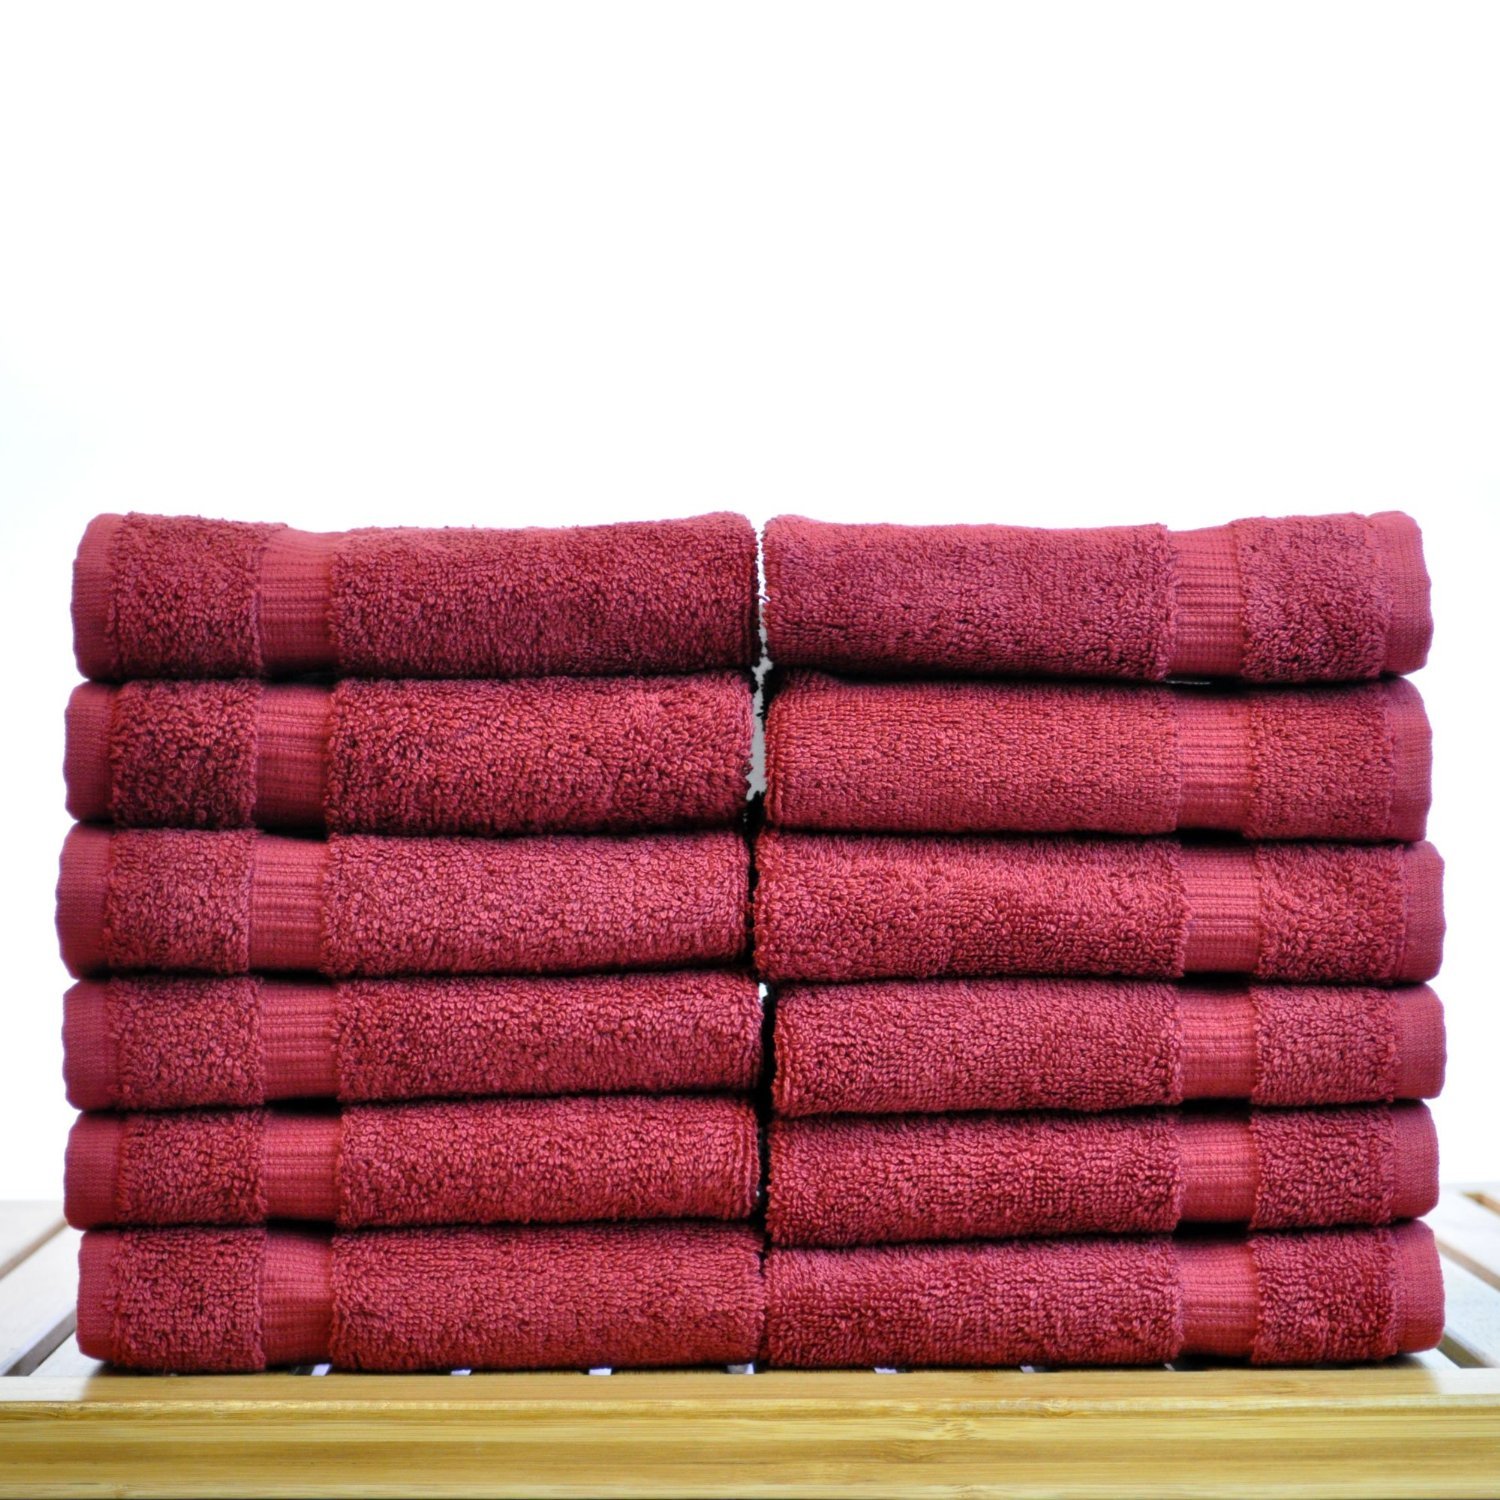 13" x 13" - 1.7 lbs/doz - 100% Turkish Cotton Cranberry Washcloth - Dobby Border - 12 Pack (Dozen)-Robemart.com